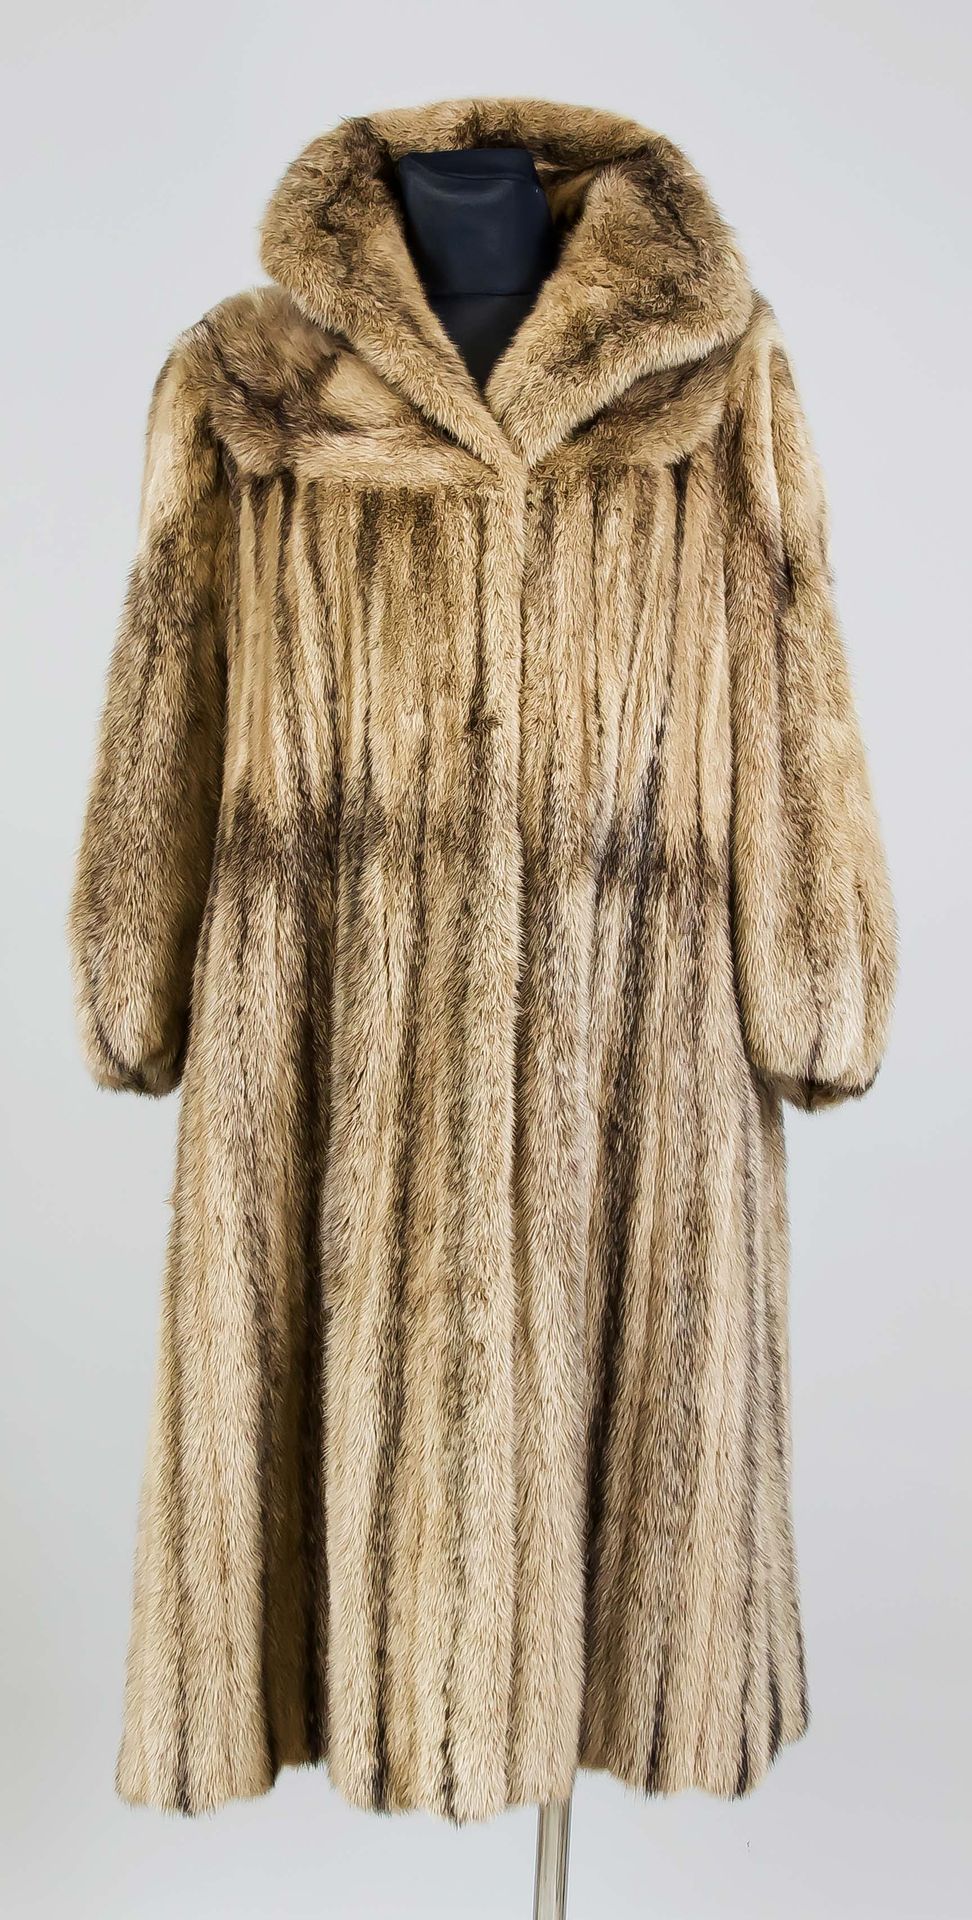 Null Ladies mink coat, gray-black mottled. Without label or size indication, sli&hellip;